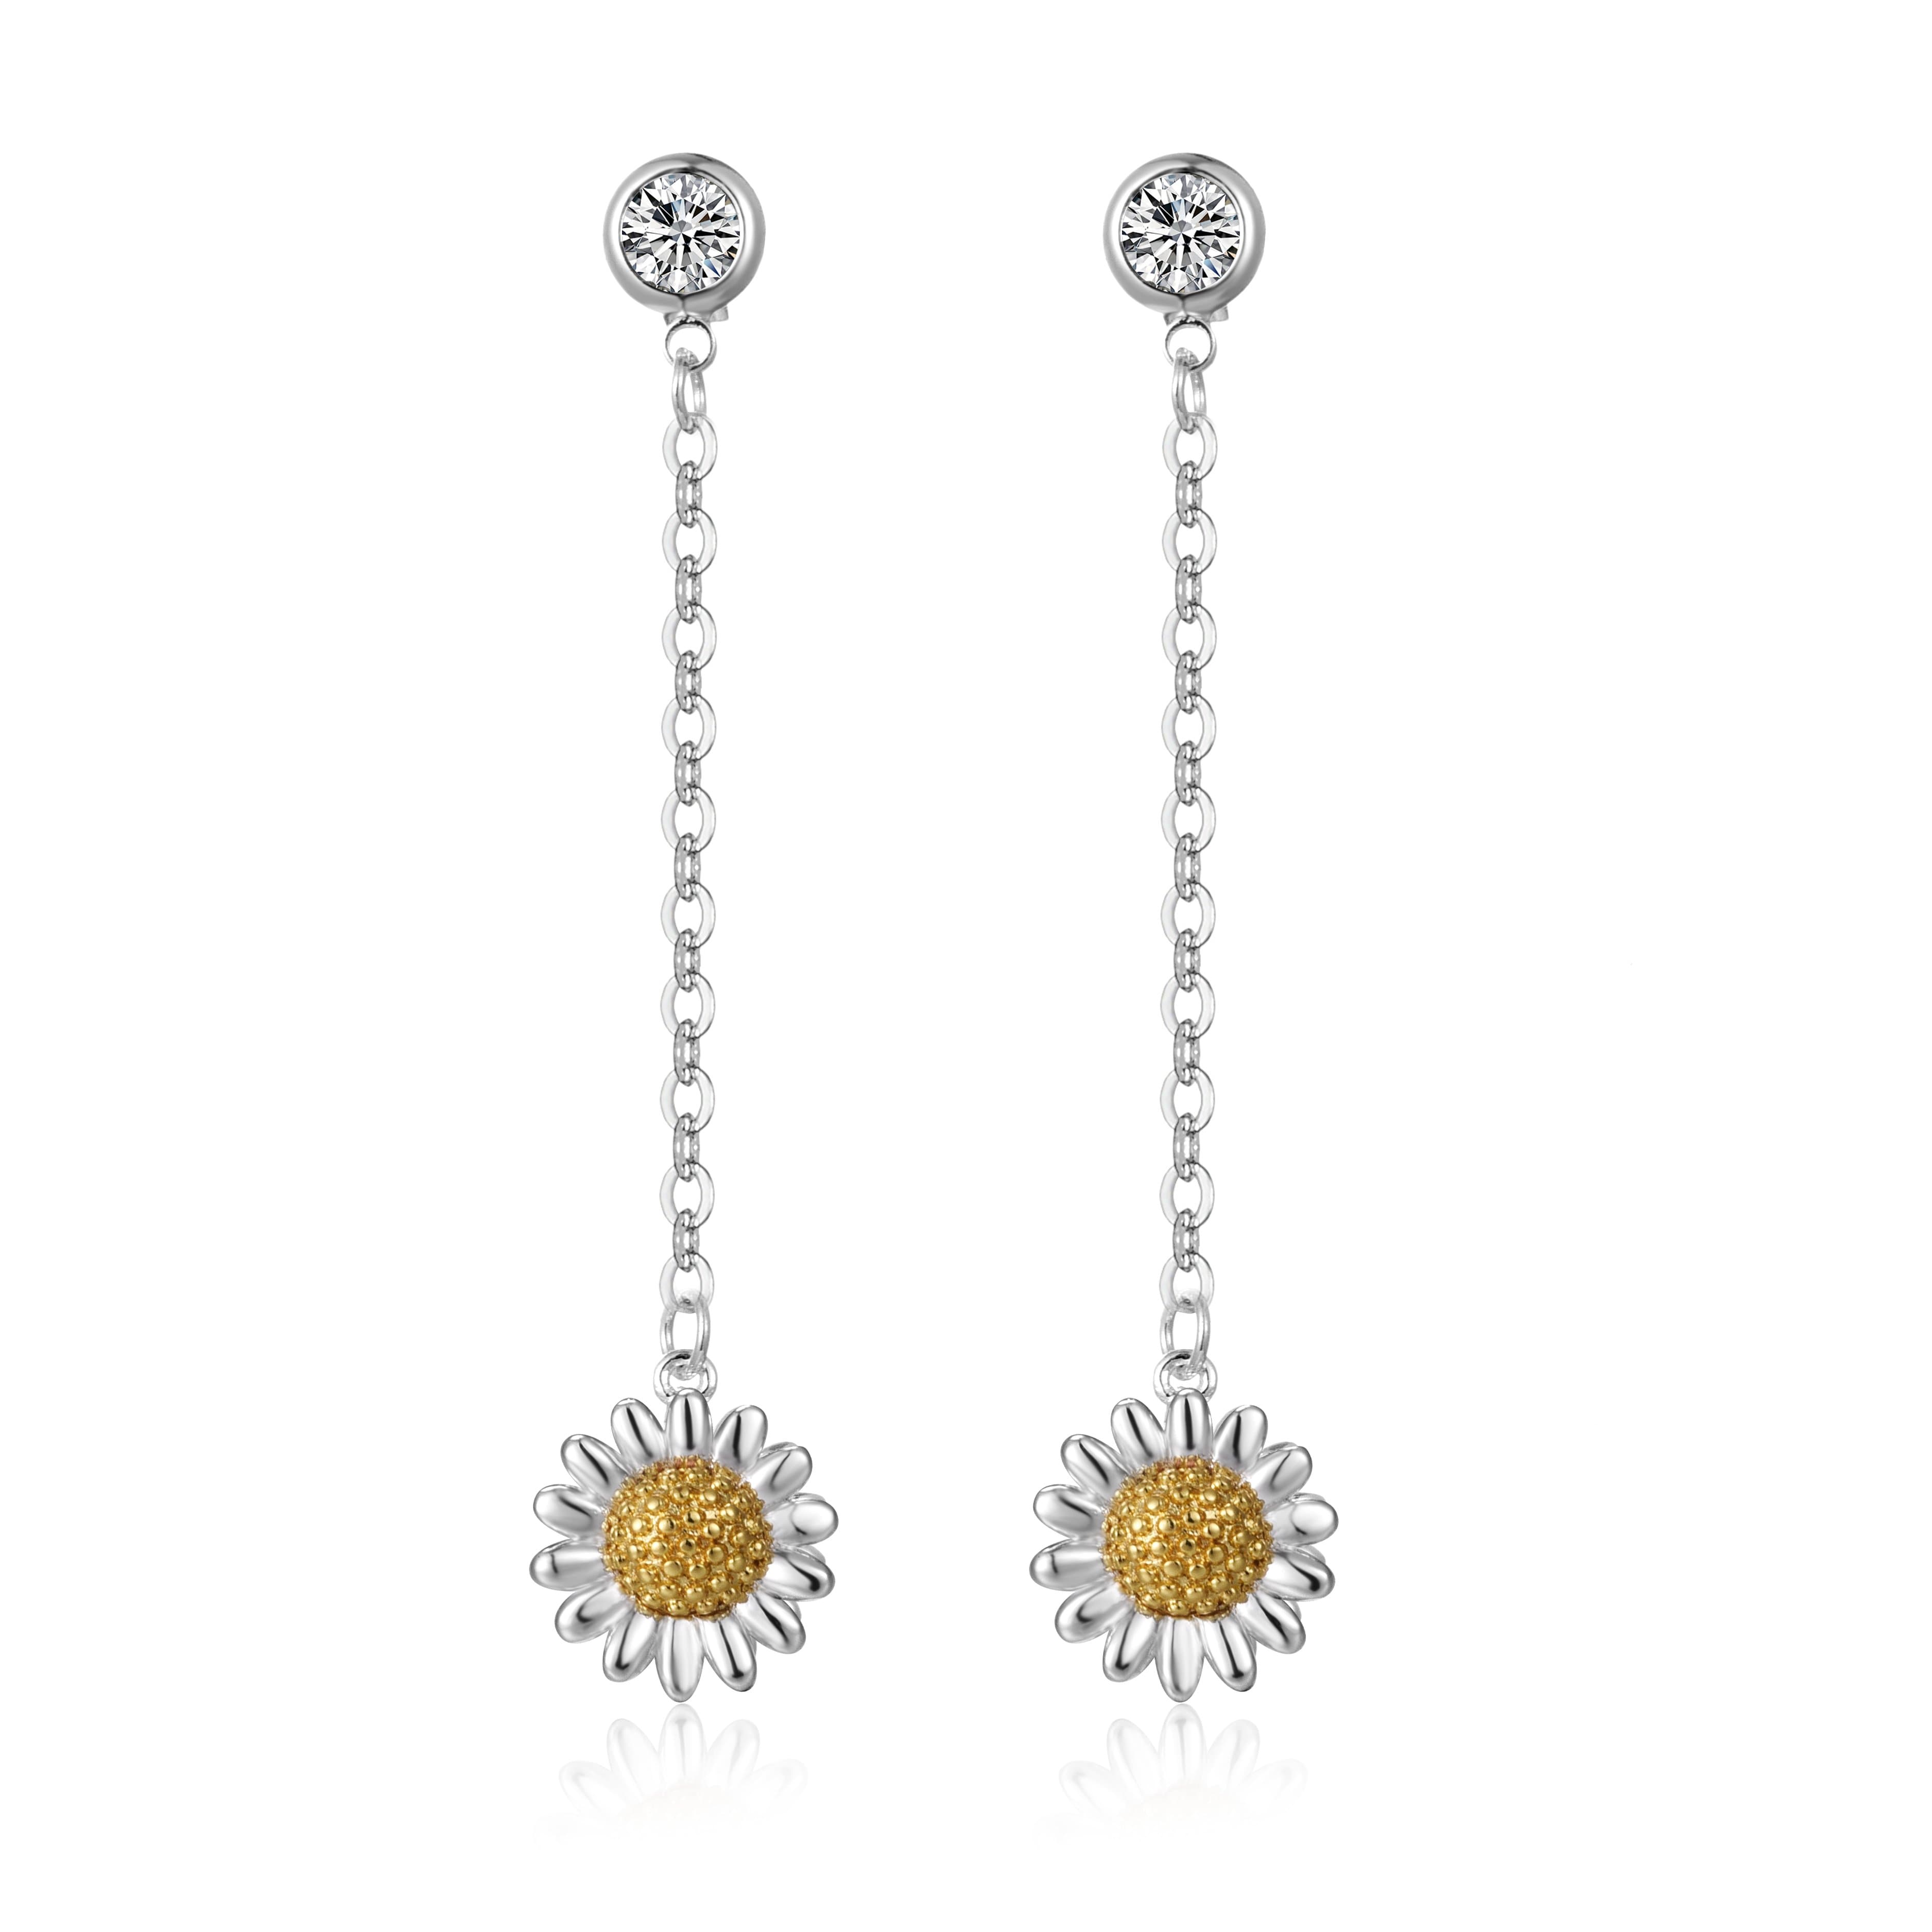 Daisy Drop Earrings Created with Zircondia® Crystals by Philip Jones Jewellery